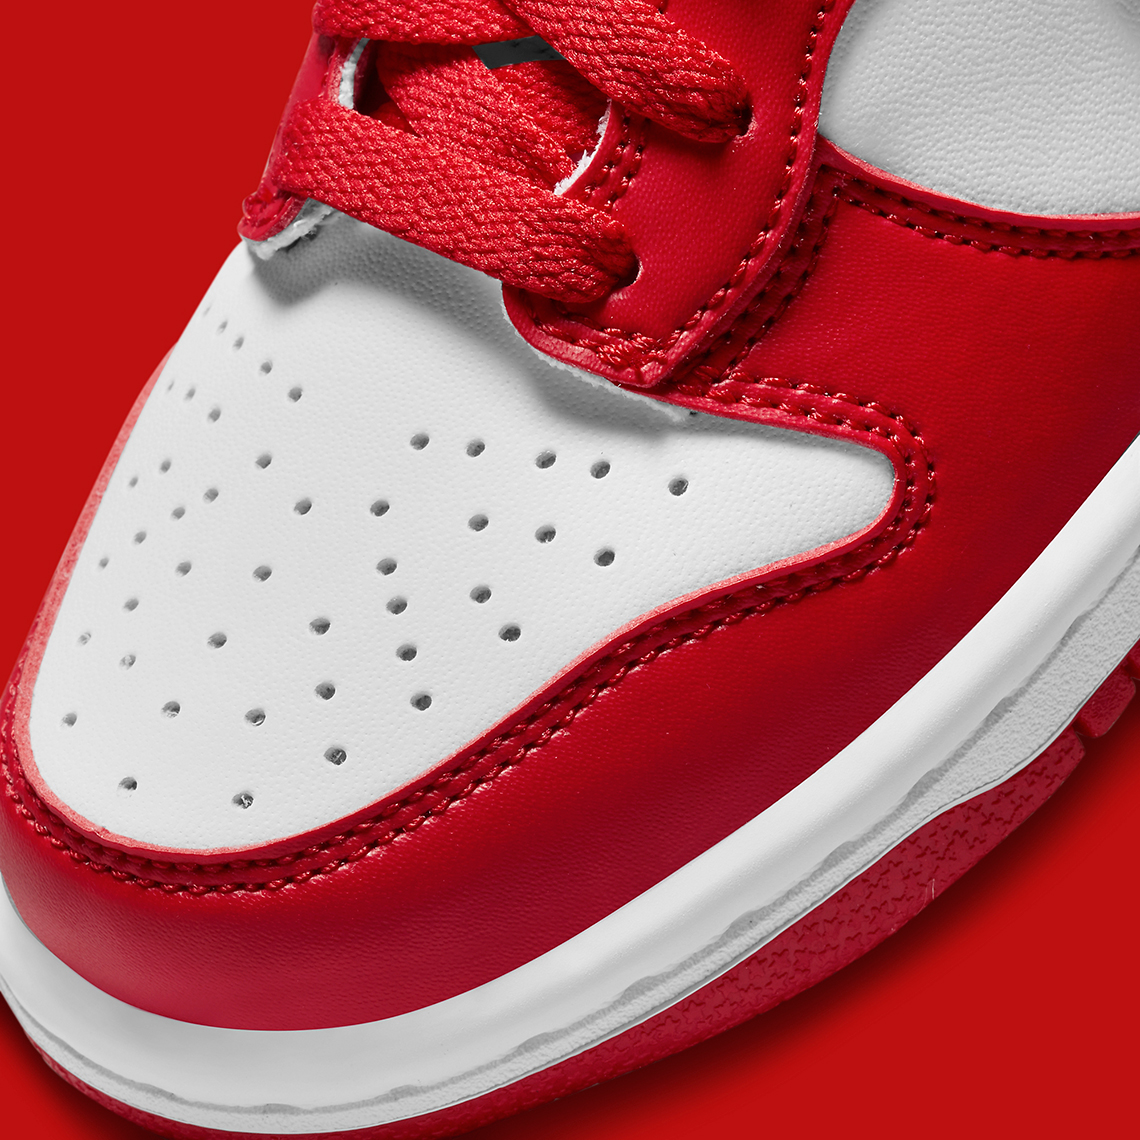 Nike Air Jordan Proto-Max 720 eu42 Gs University Red White Db2179 106 5